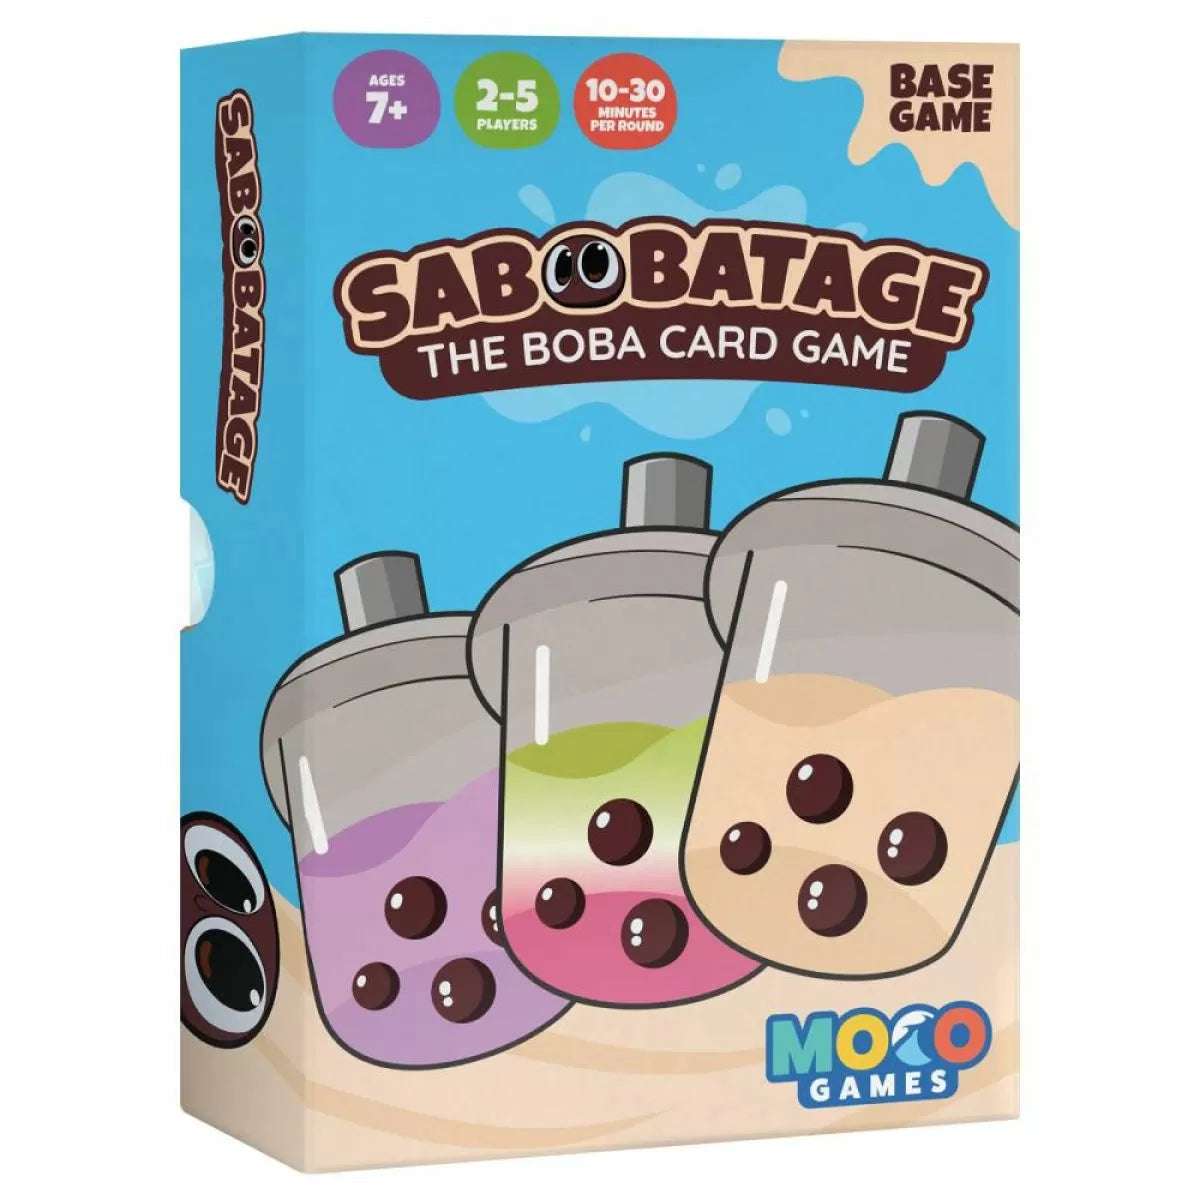 Sabobatage The Boba Card Game